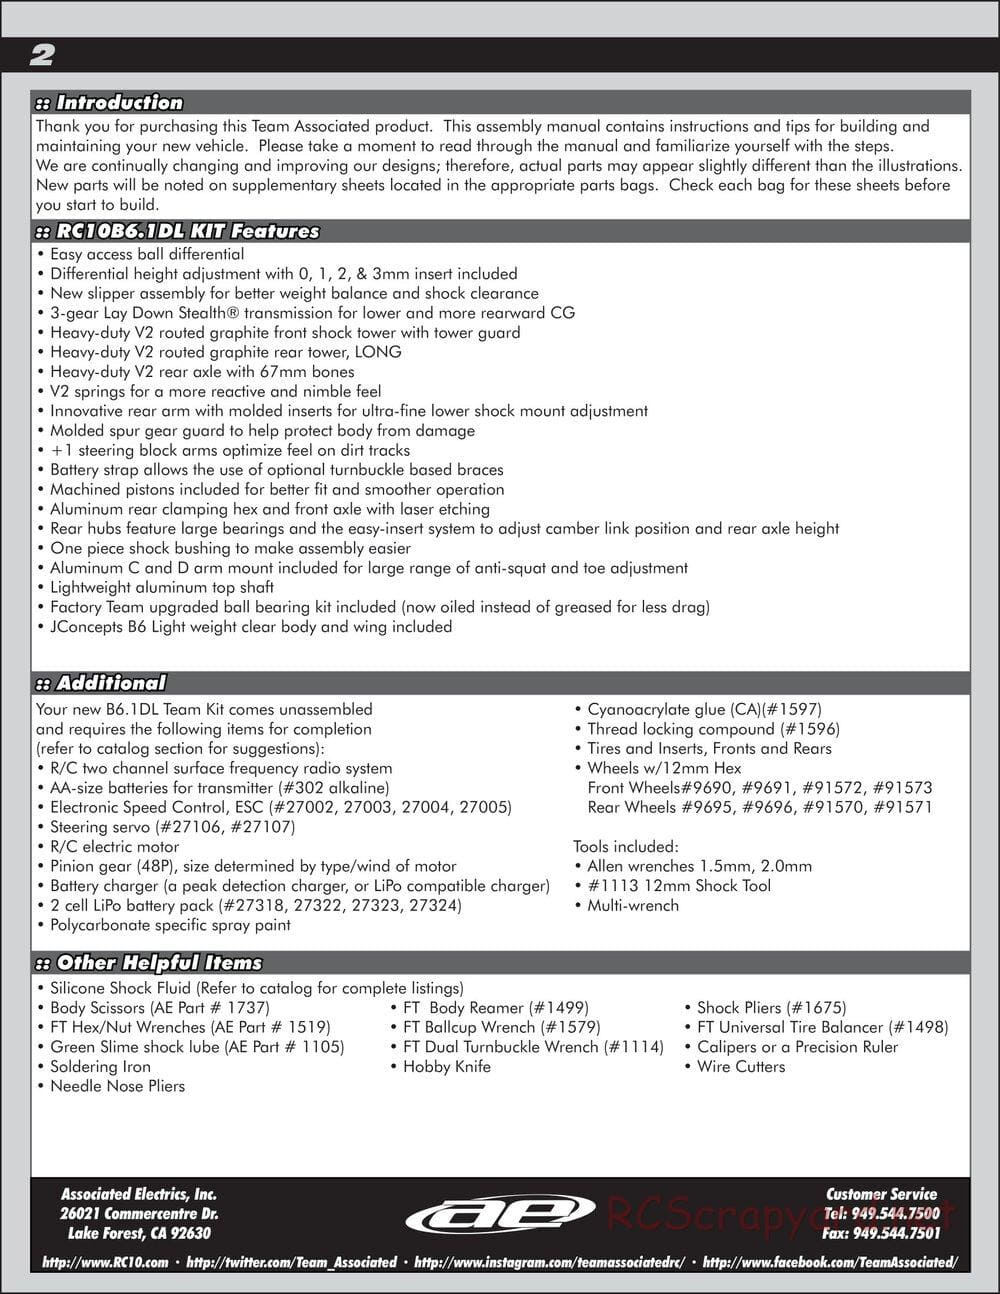 Team Associated - RC10 B6.1DL Team Kit - Manual - Page 2